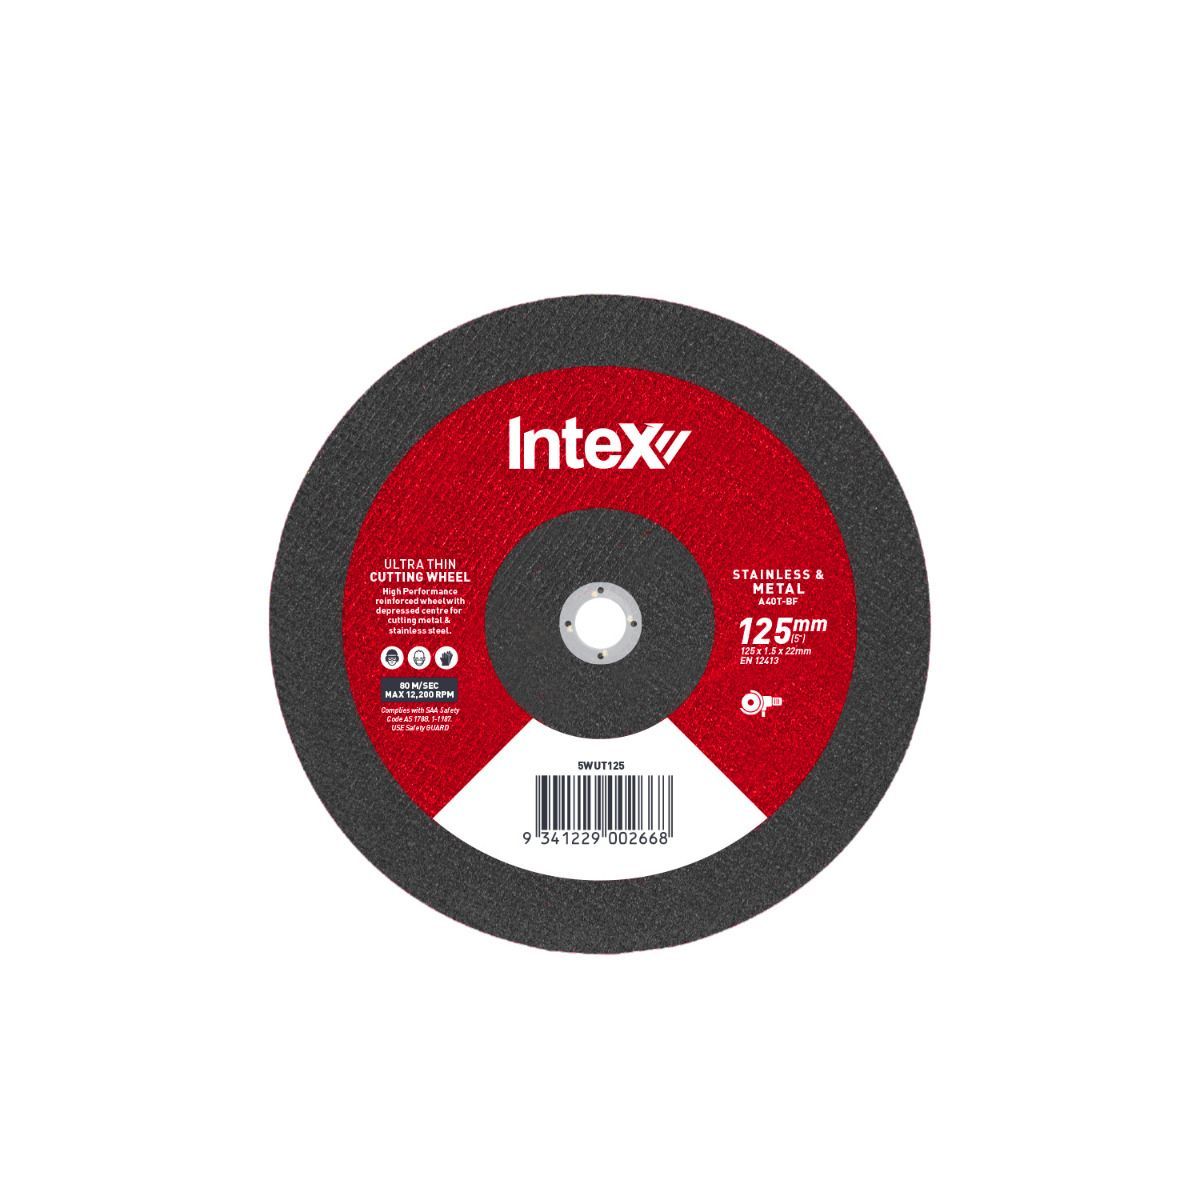 Intex Ultra Thin Metal & Stainless Cutting Wheels